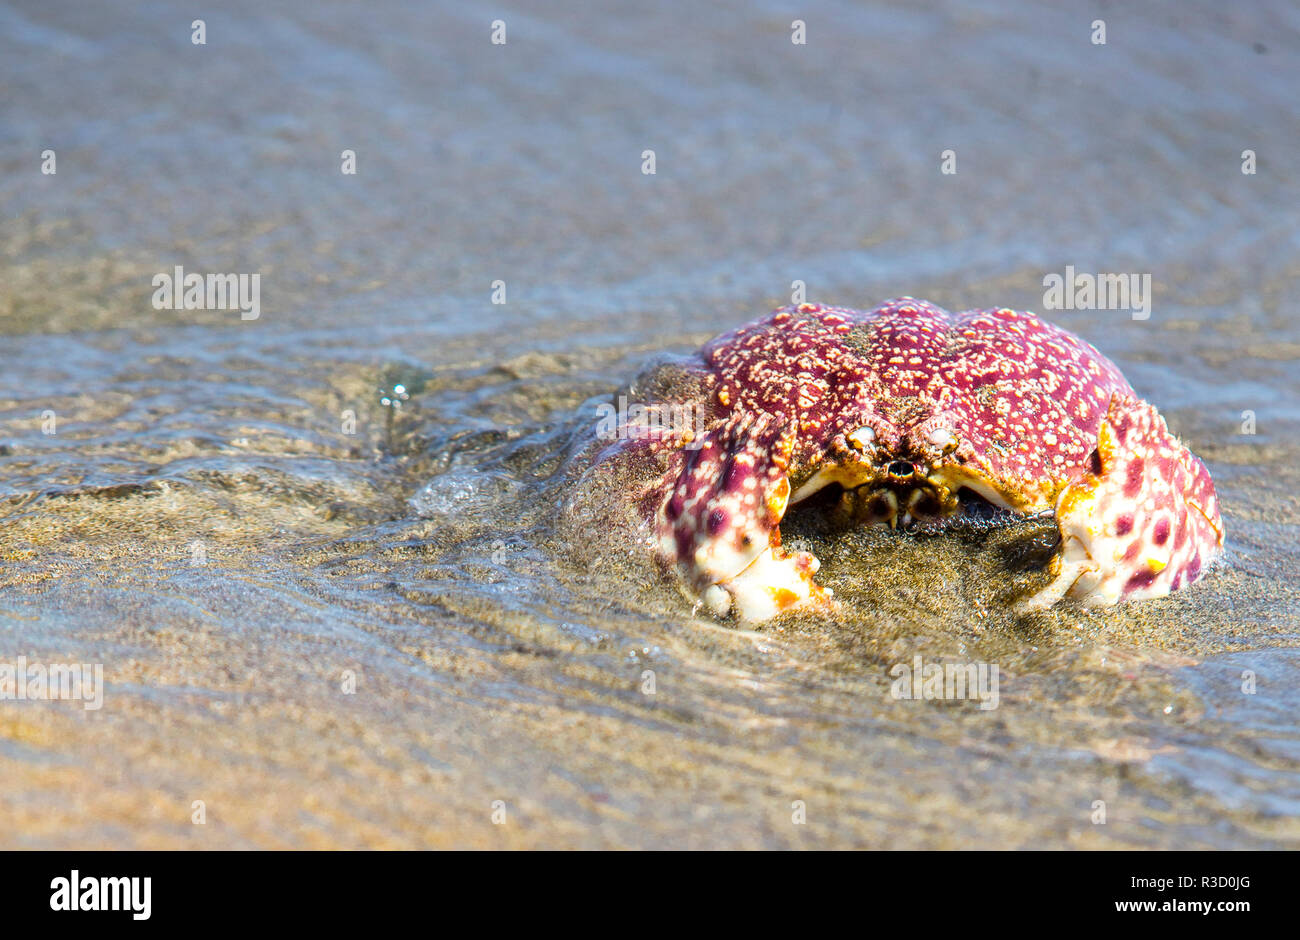 Baja, Sea of Cortez, Gulf of California, Mexico. Magdalena Beach. Close-up of a Box Crab. Stock Photo